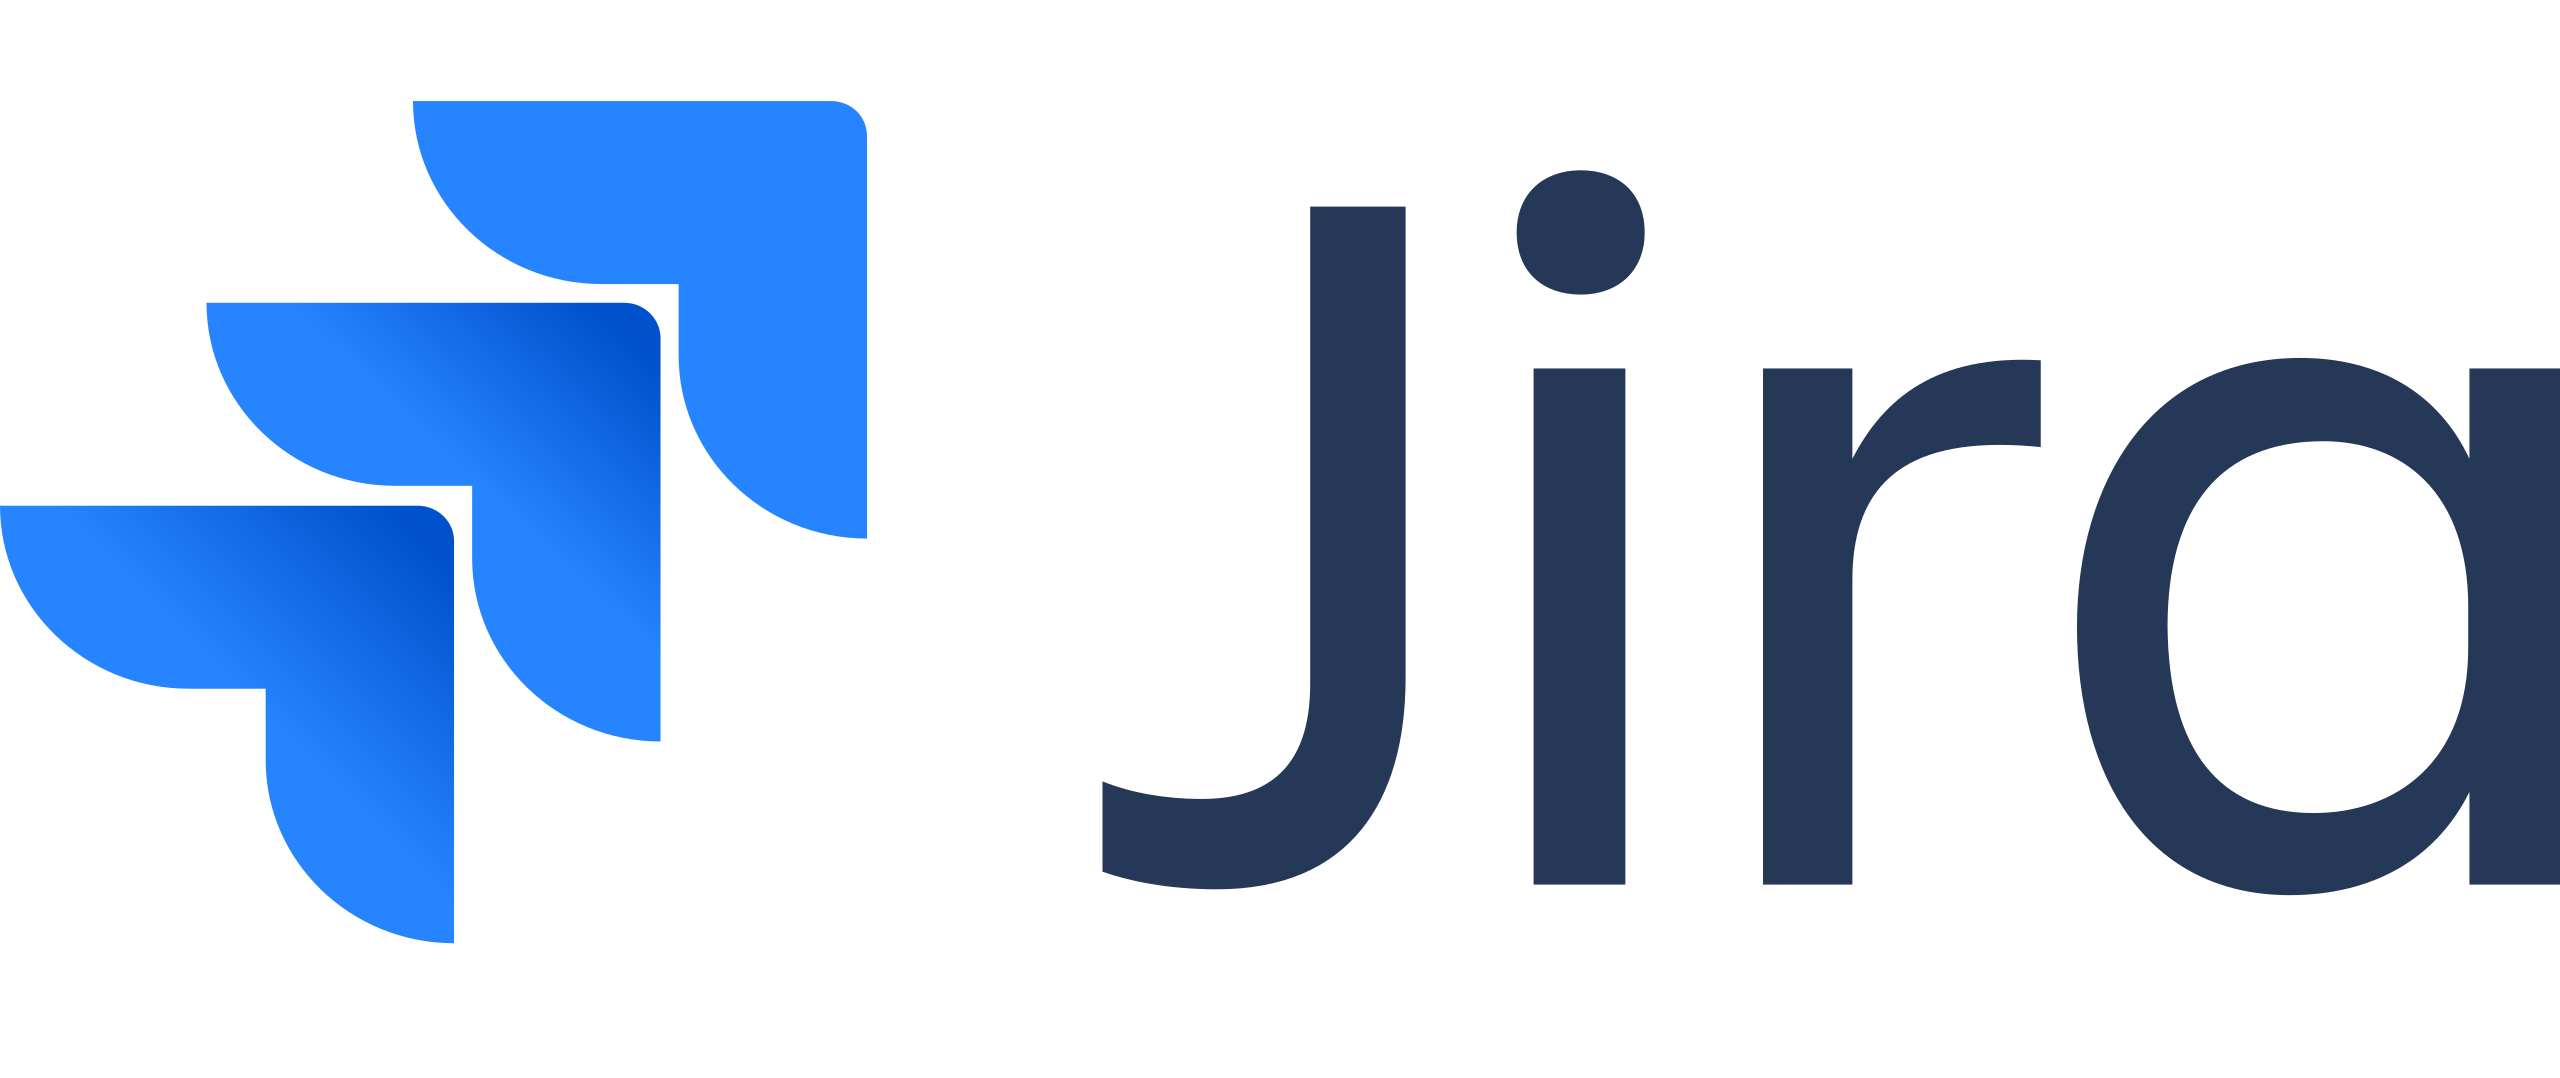 Jira logo.svg